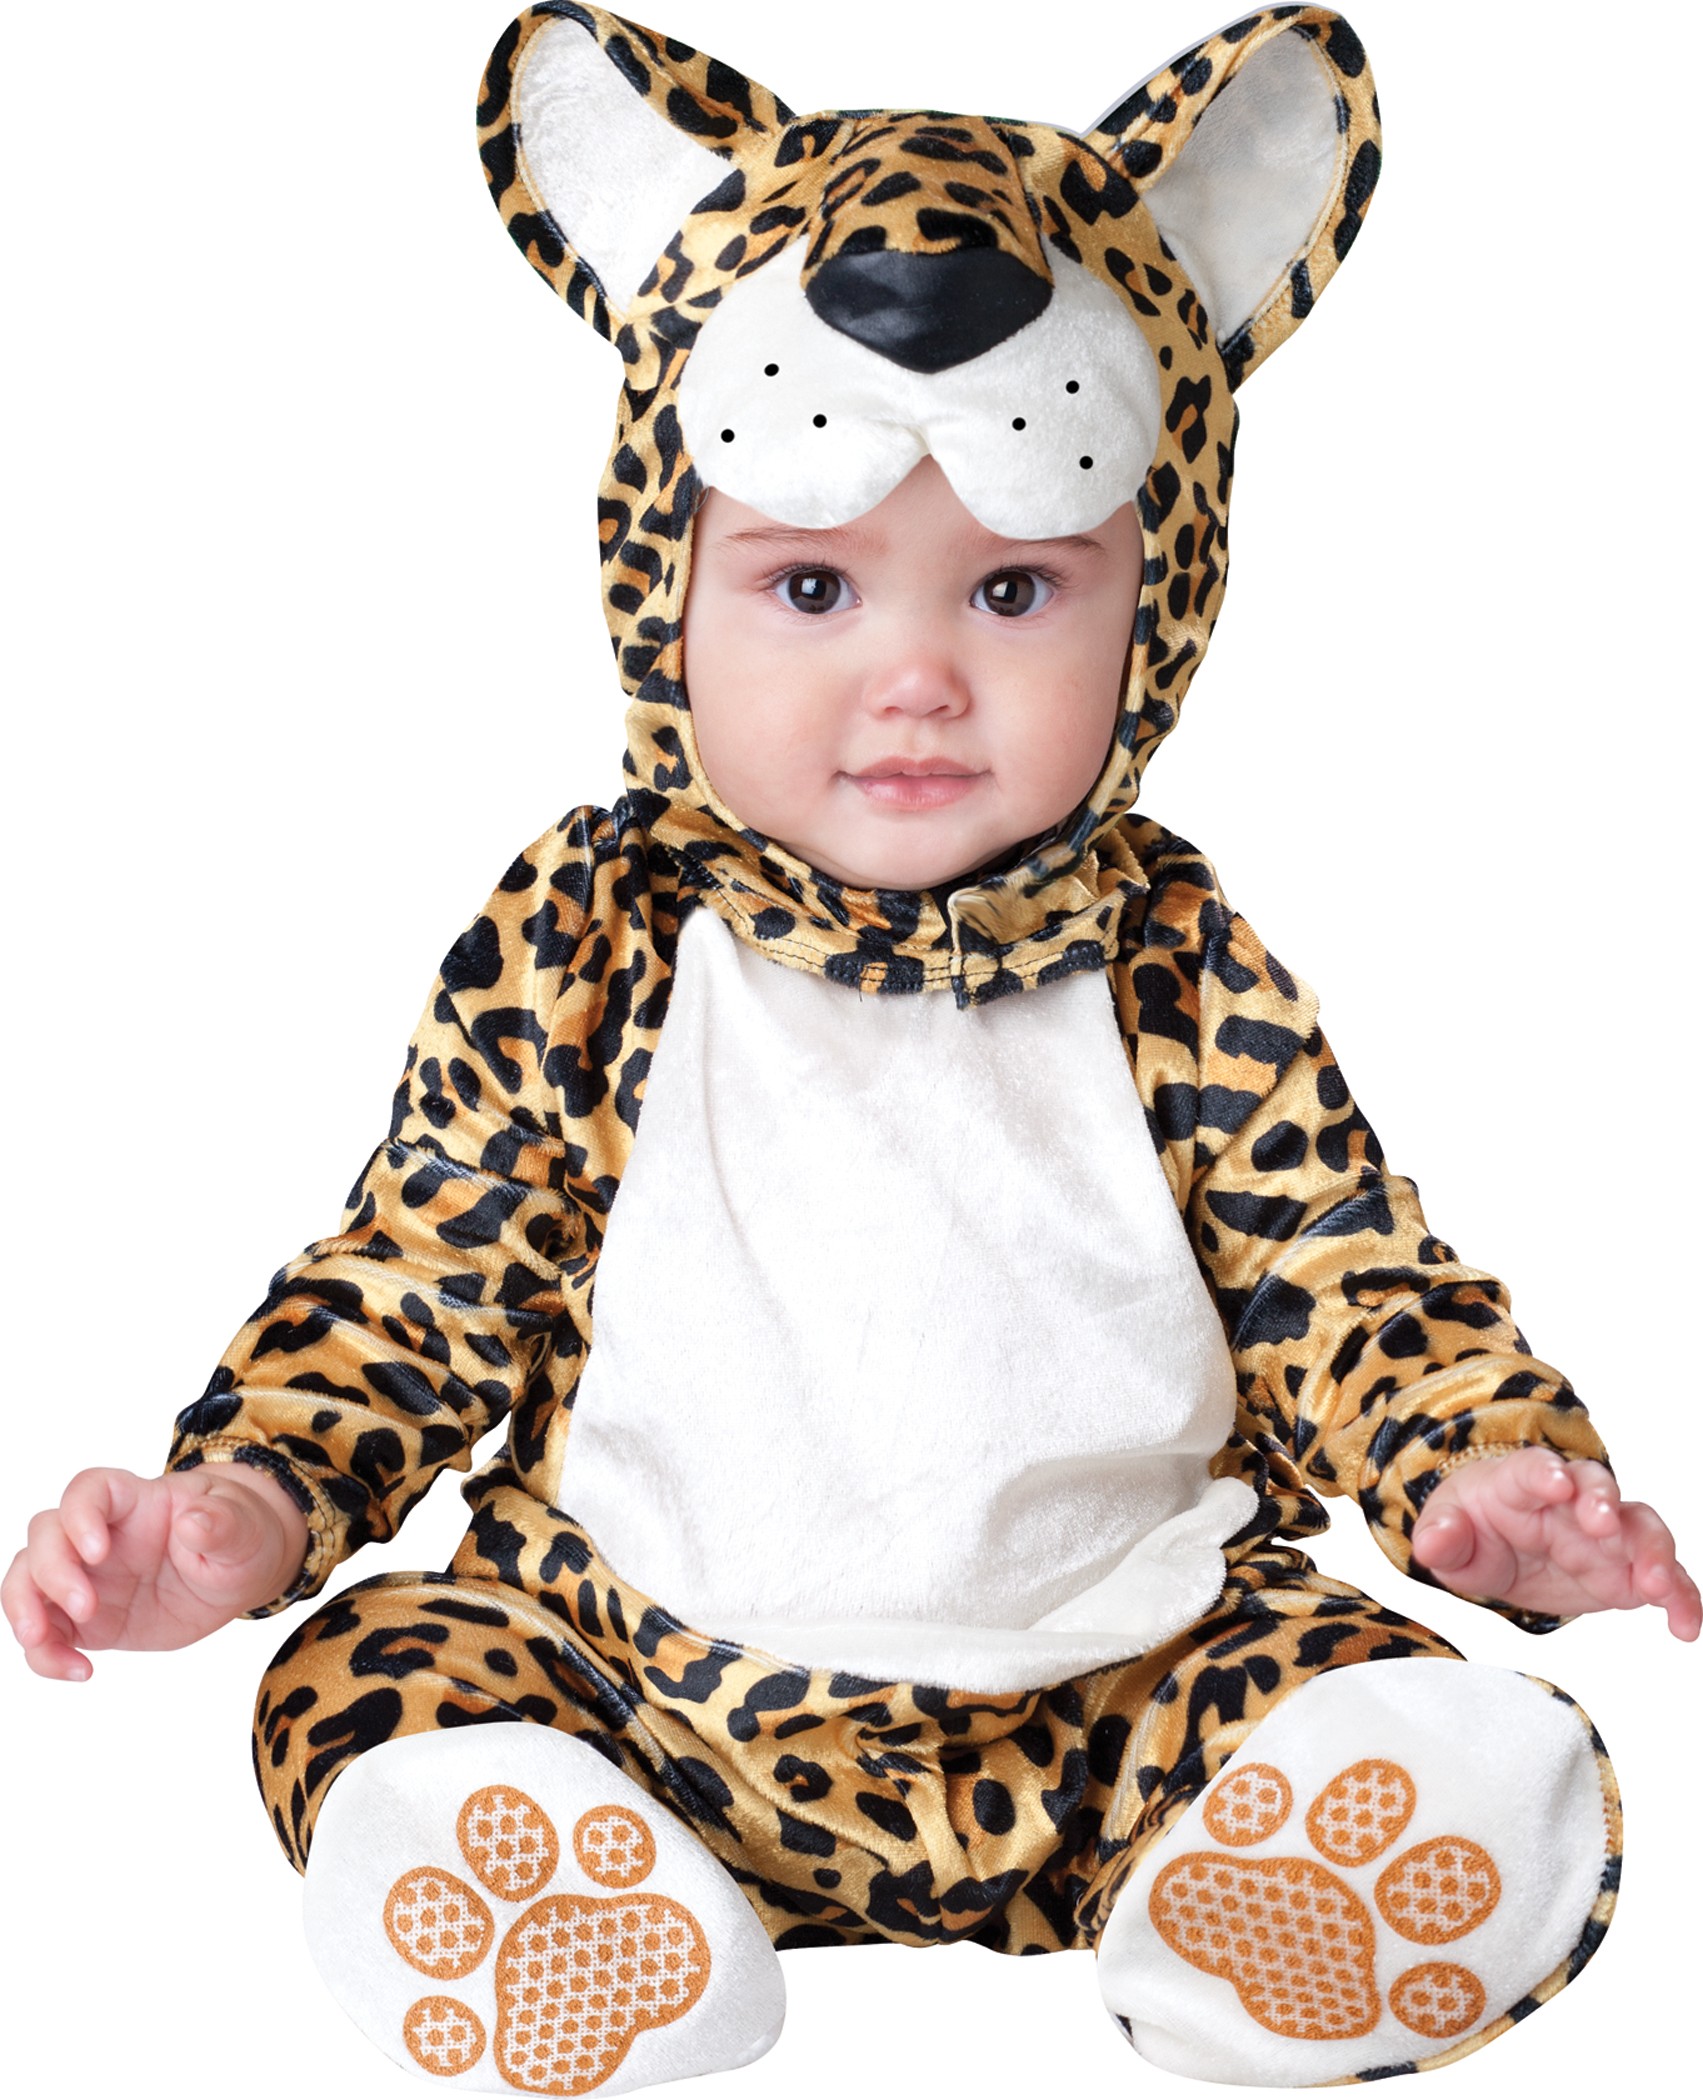 Costume Carnevale Leopardo per Bambino Incharacter 0-24 mesi - PartyLook